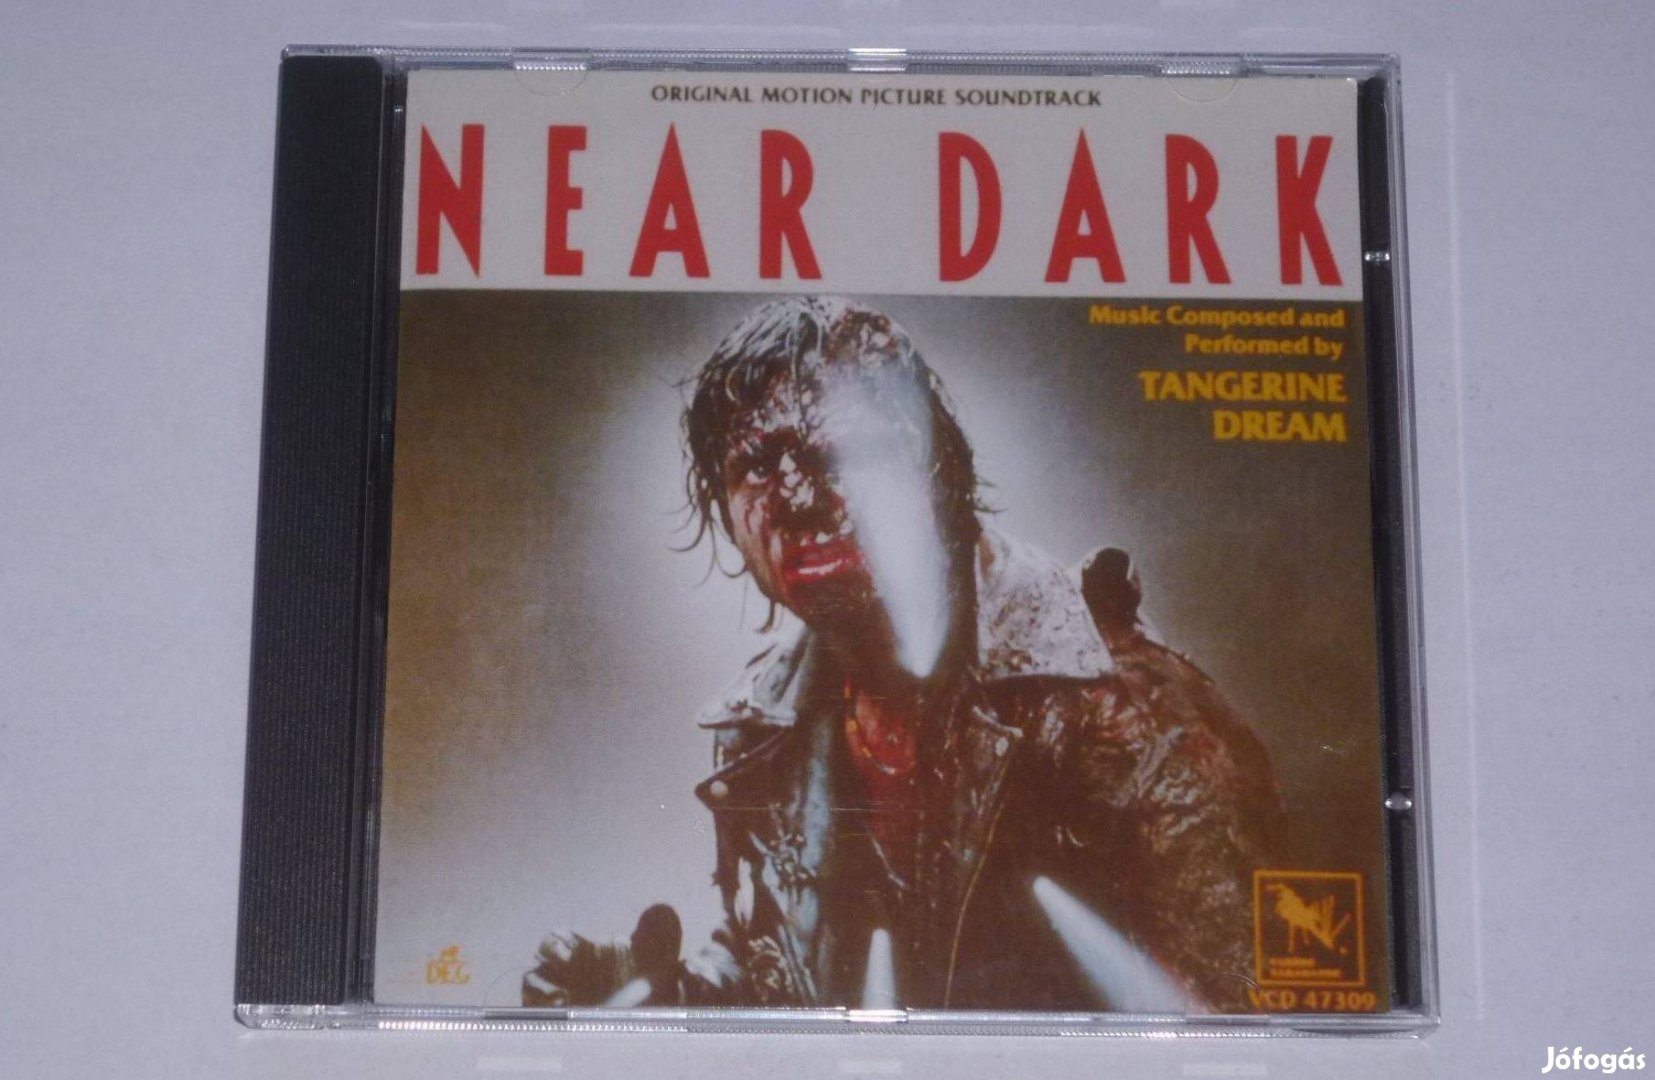 Tangerine Dream - Near Dark (Original Motion Picture Soundtrack) CD